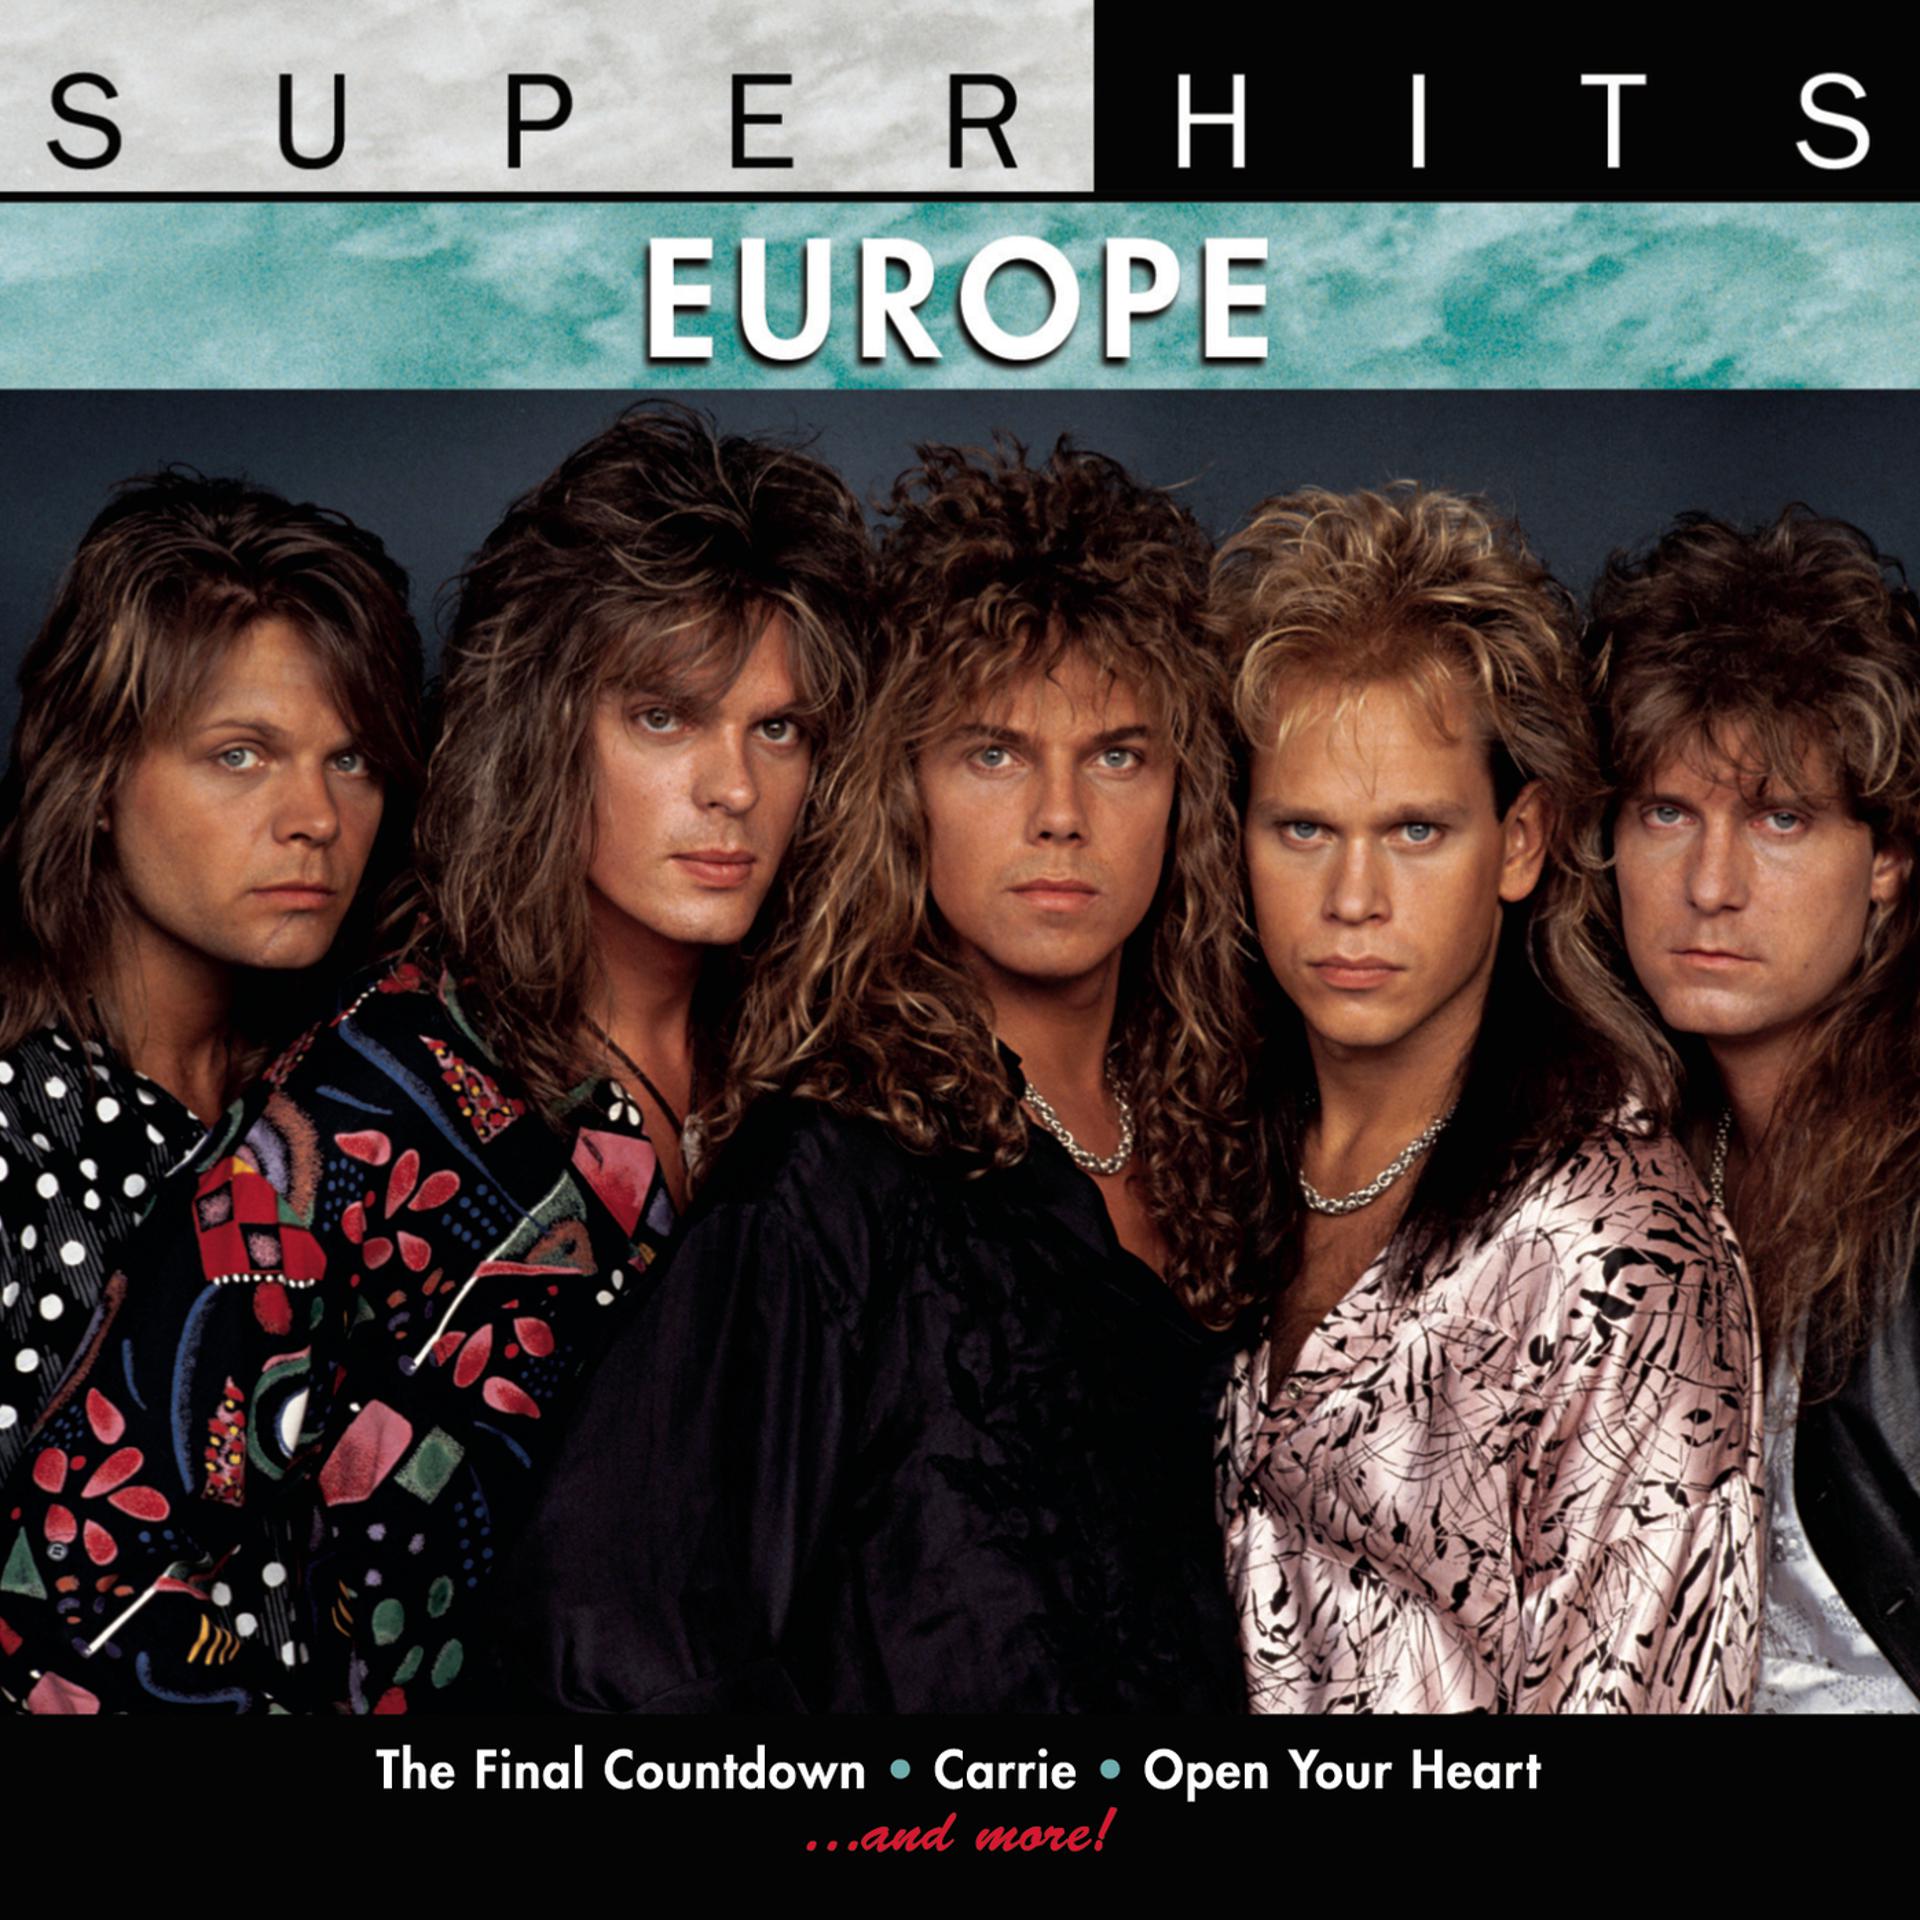 Europe группа 1986. Europa группа the Final Countdown. Europe Band обложки. Europe the Final Countdown обложка. Слушать рок хиты 80 90 зарубежные